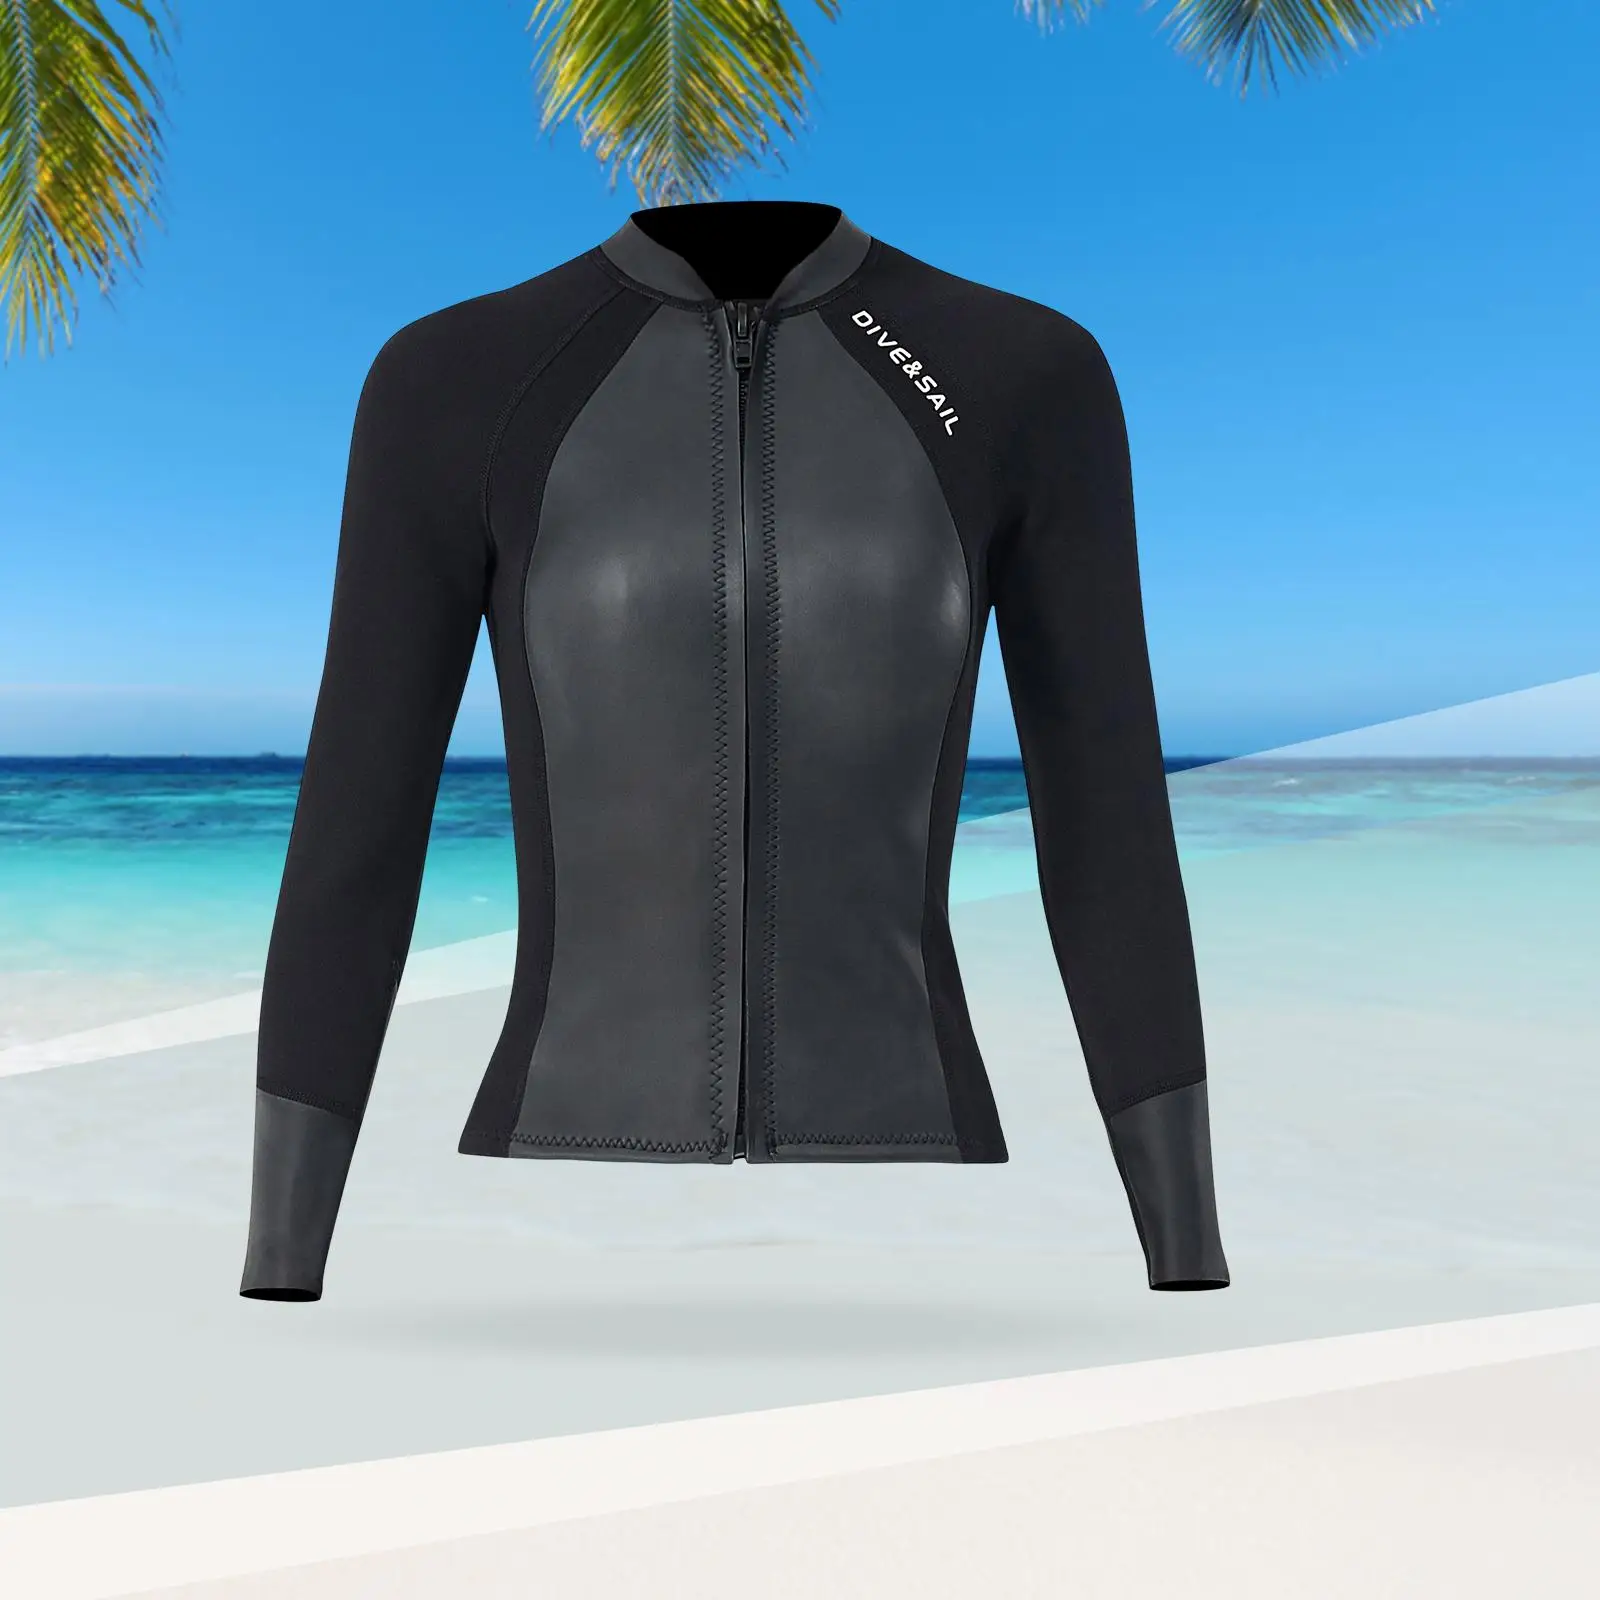 2mm Neoprene Wetsuit Top Scuba Diving Suit Sun Protection Keep Warm Dive Suit Wet Suit for Kayaking Snorkeling Surfing Canoeing